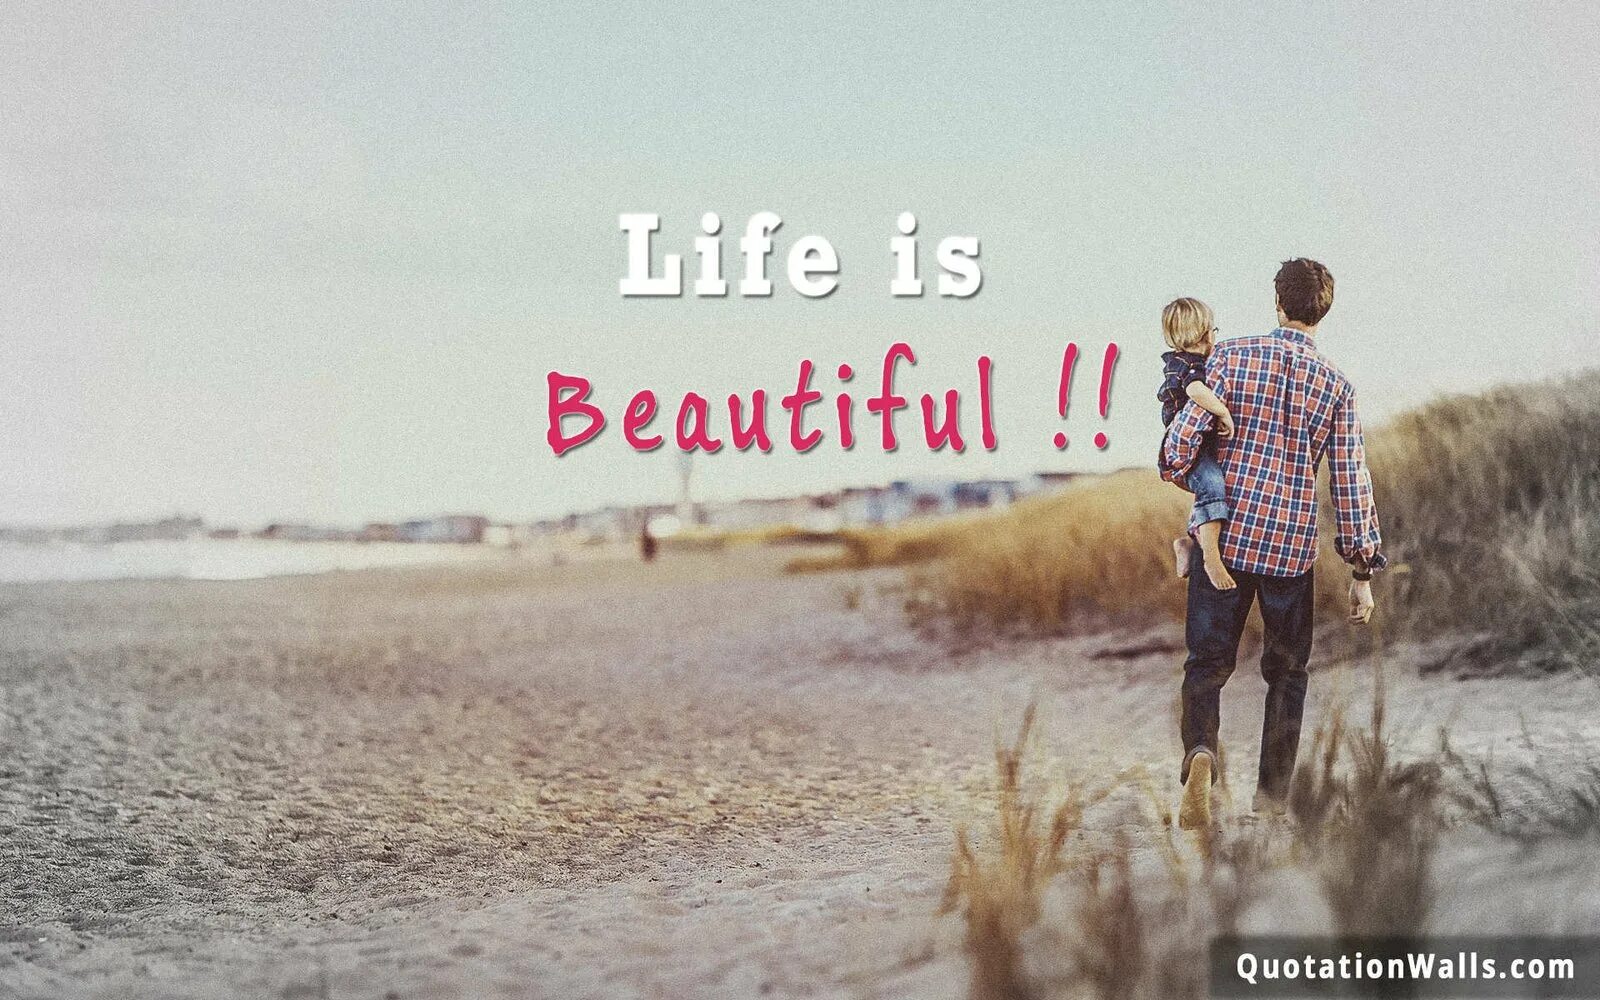 It was a beautiful summer. Life is beautiful. Life is beautiful картинки. Life is beautiful обои. Обои на телефон Life is beautiful.